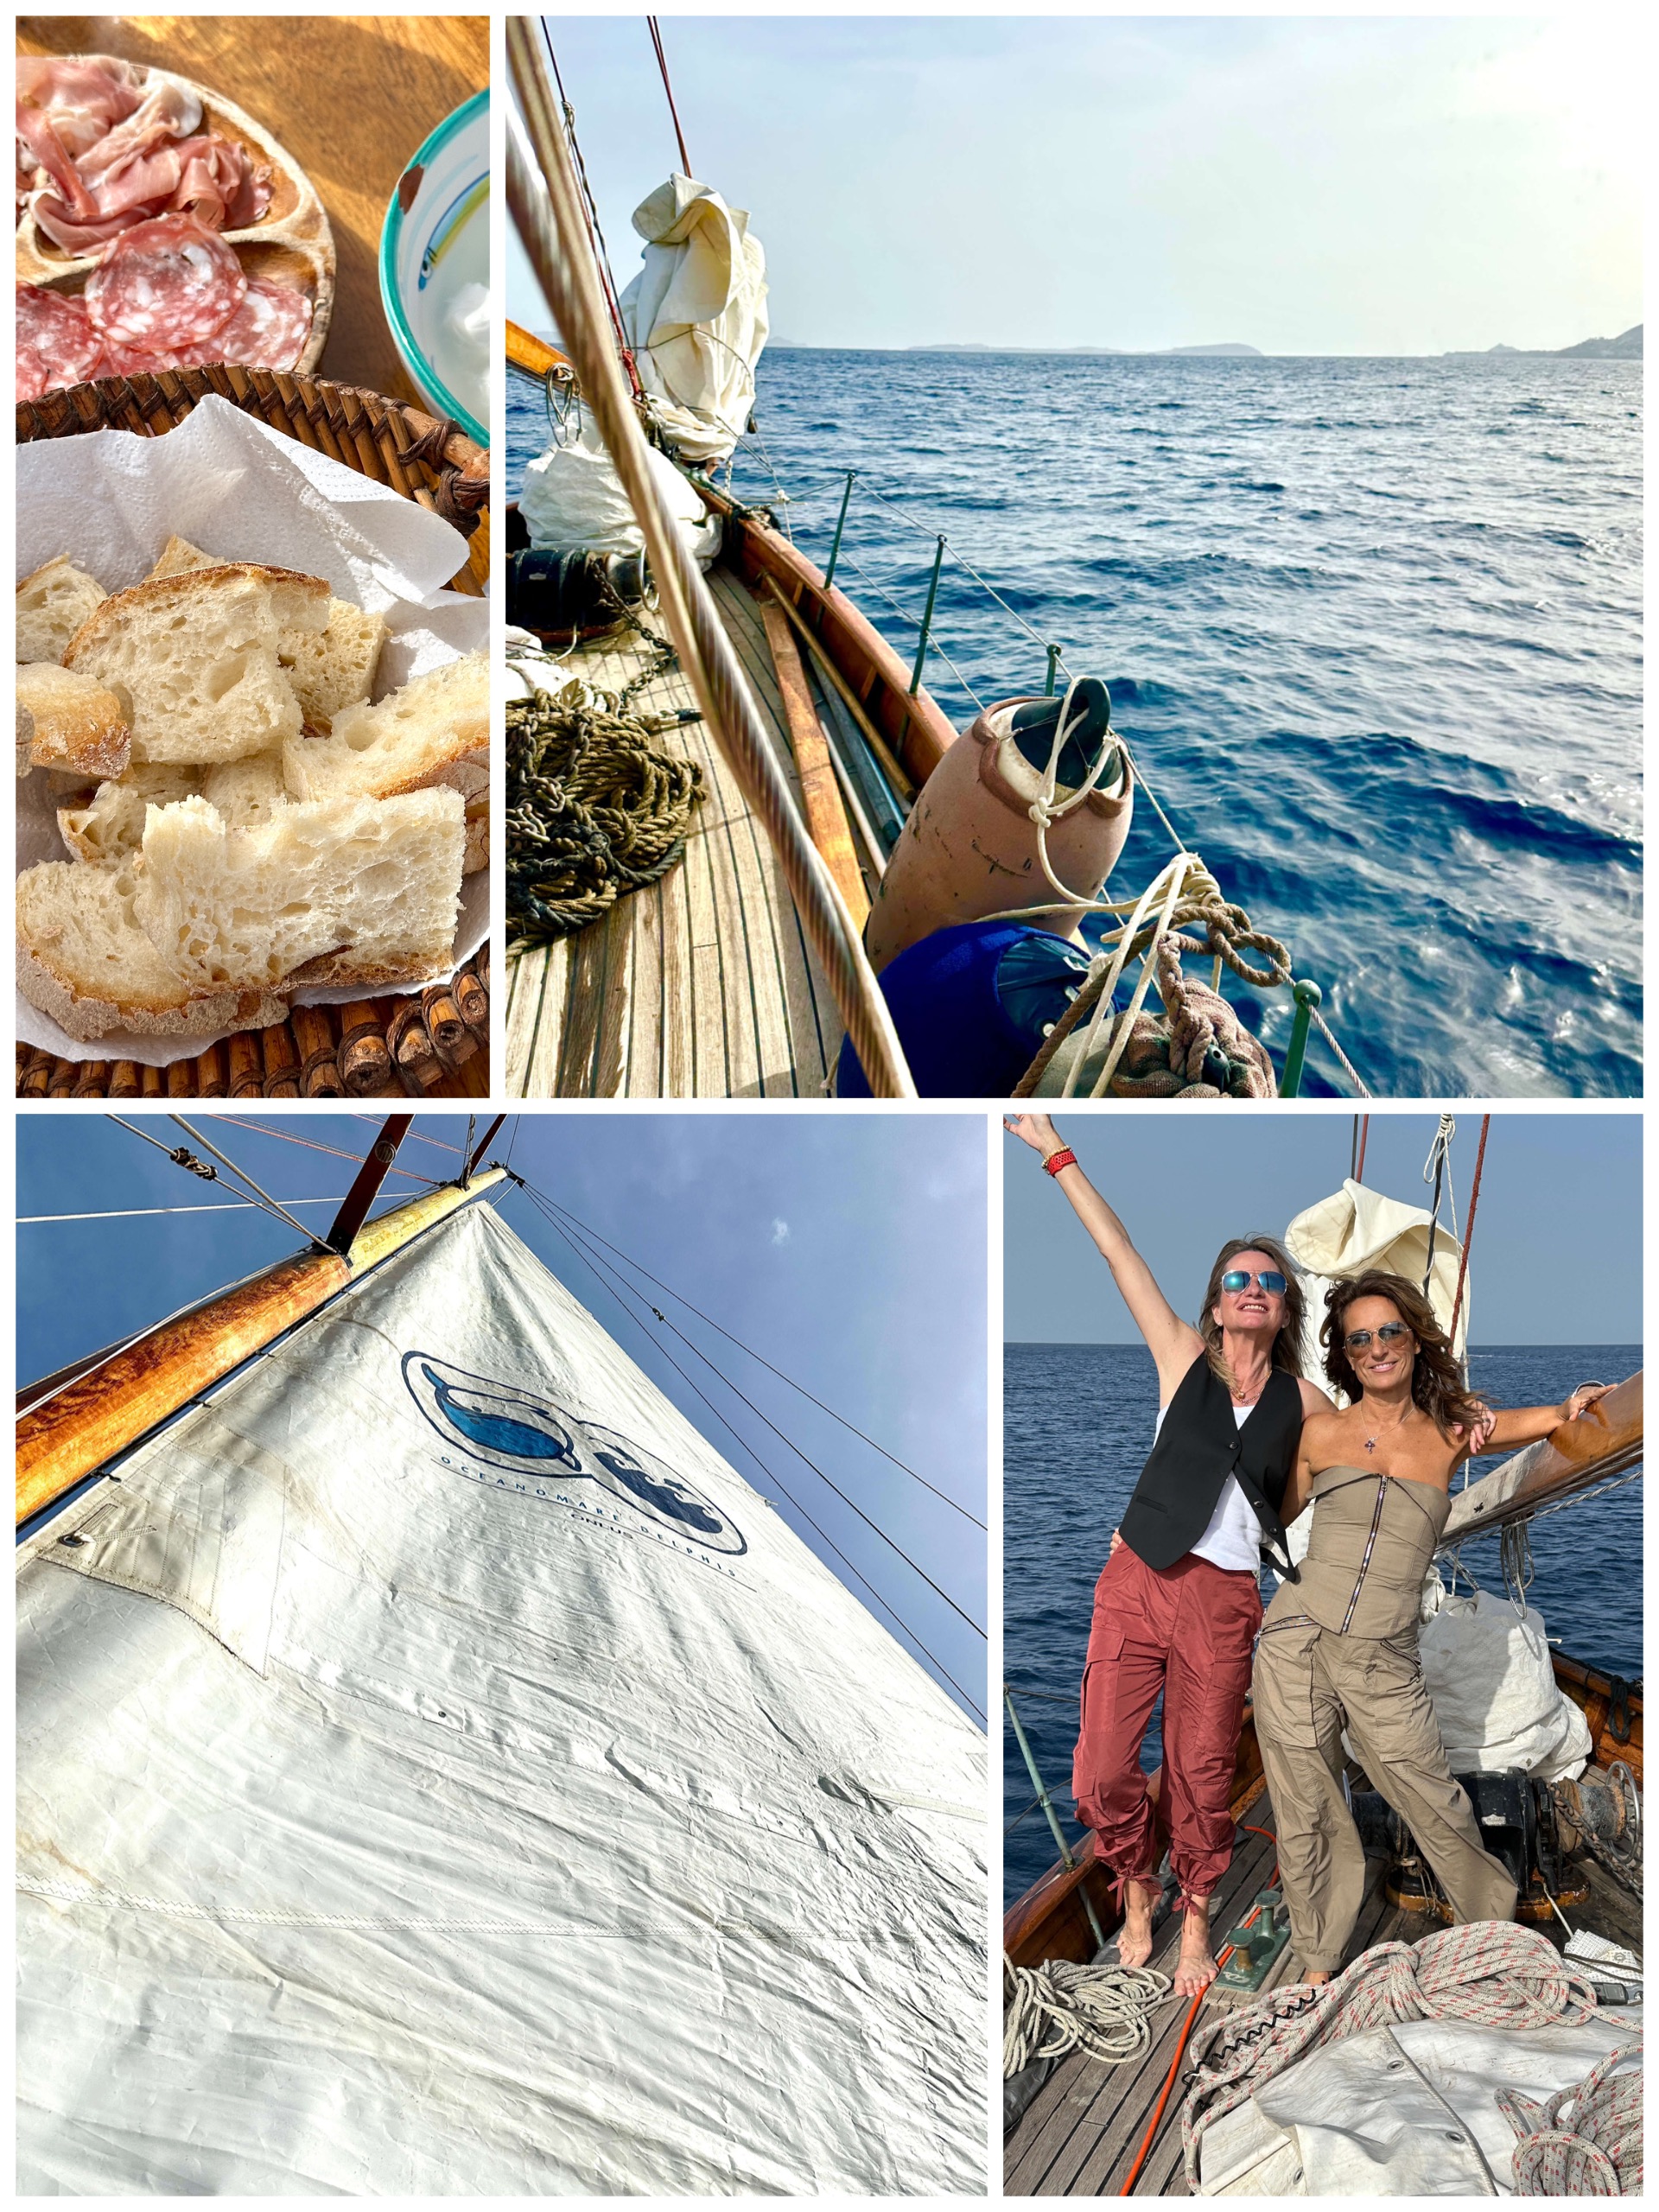 Ischia - The Insider Travel Guide
Oceanomare Delphis